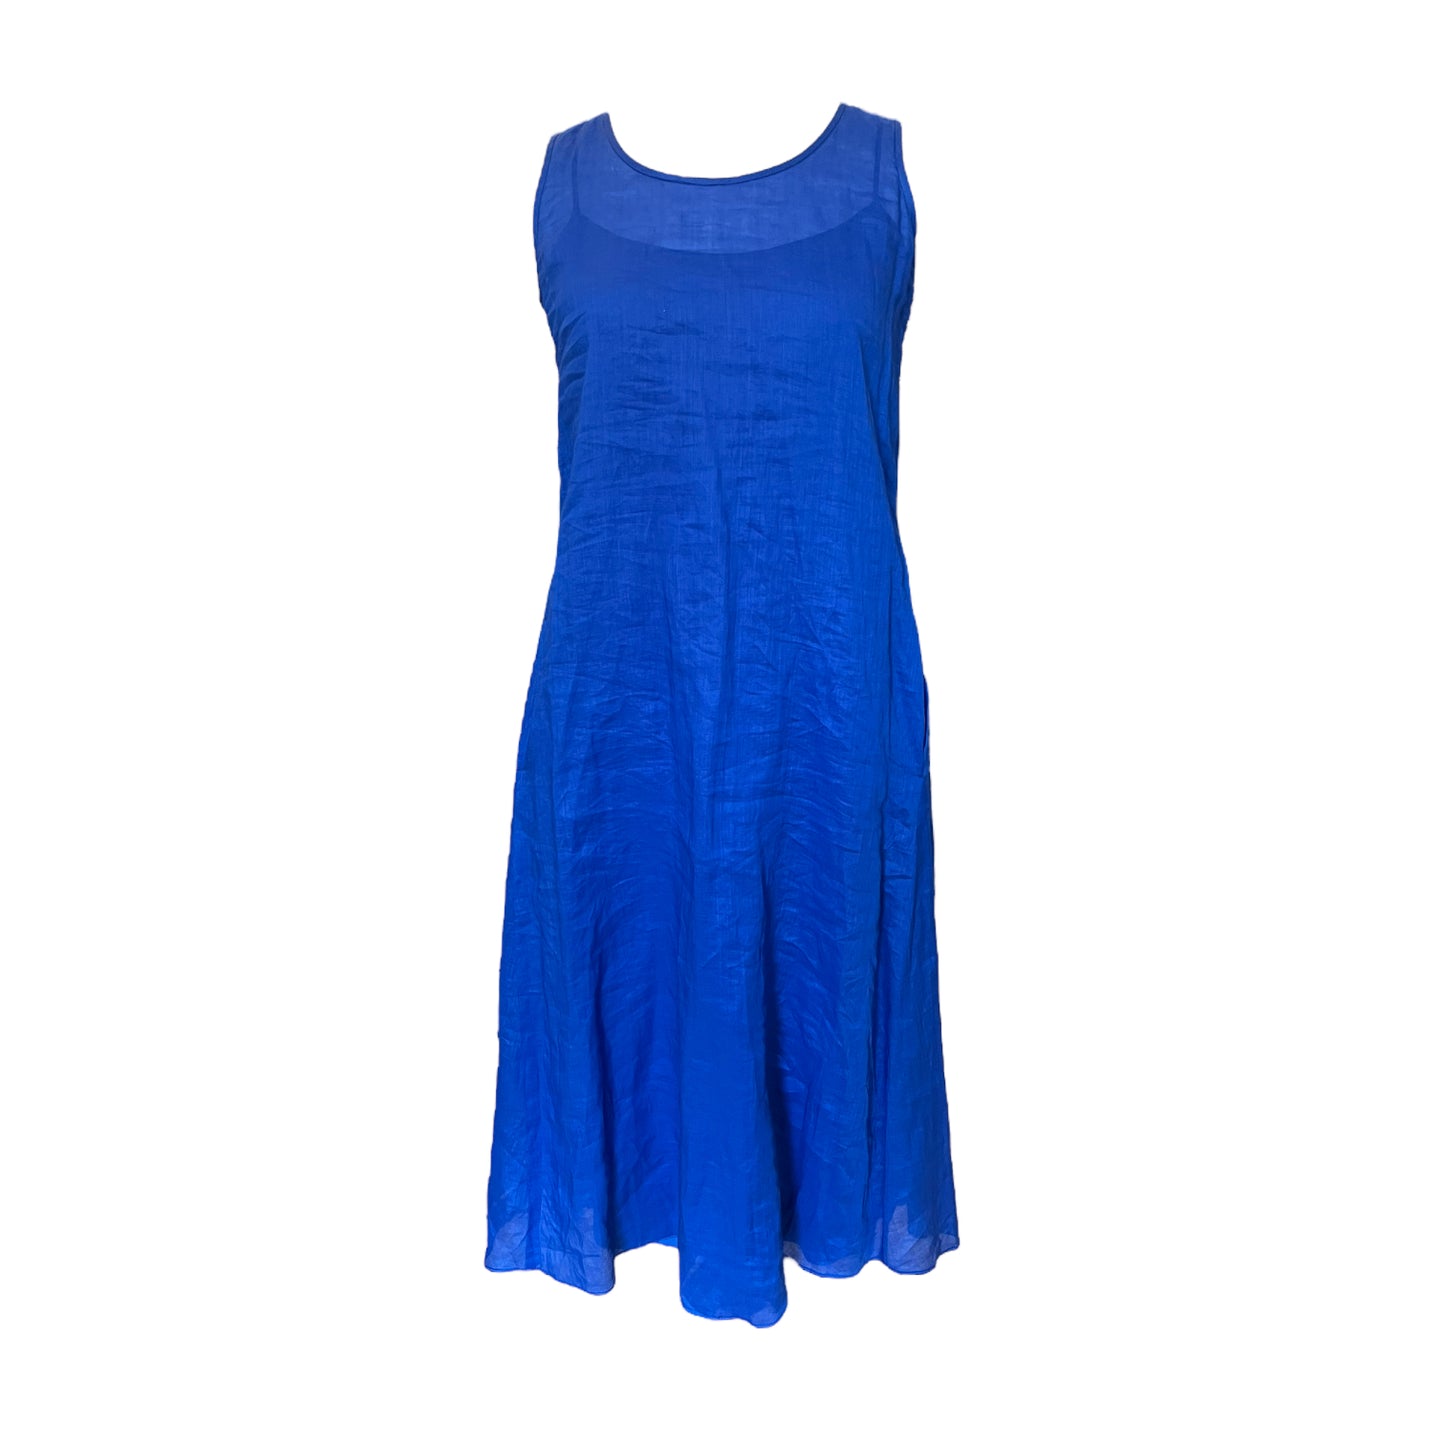 Sport Max Cobalt Blue Dress and Slip